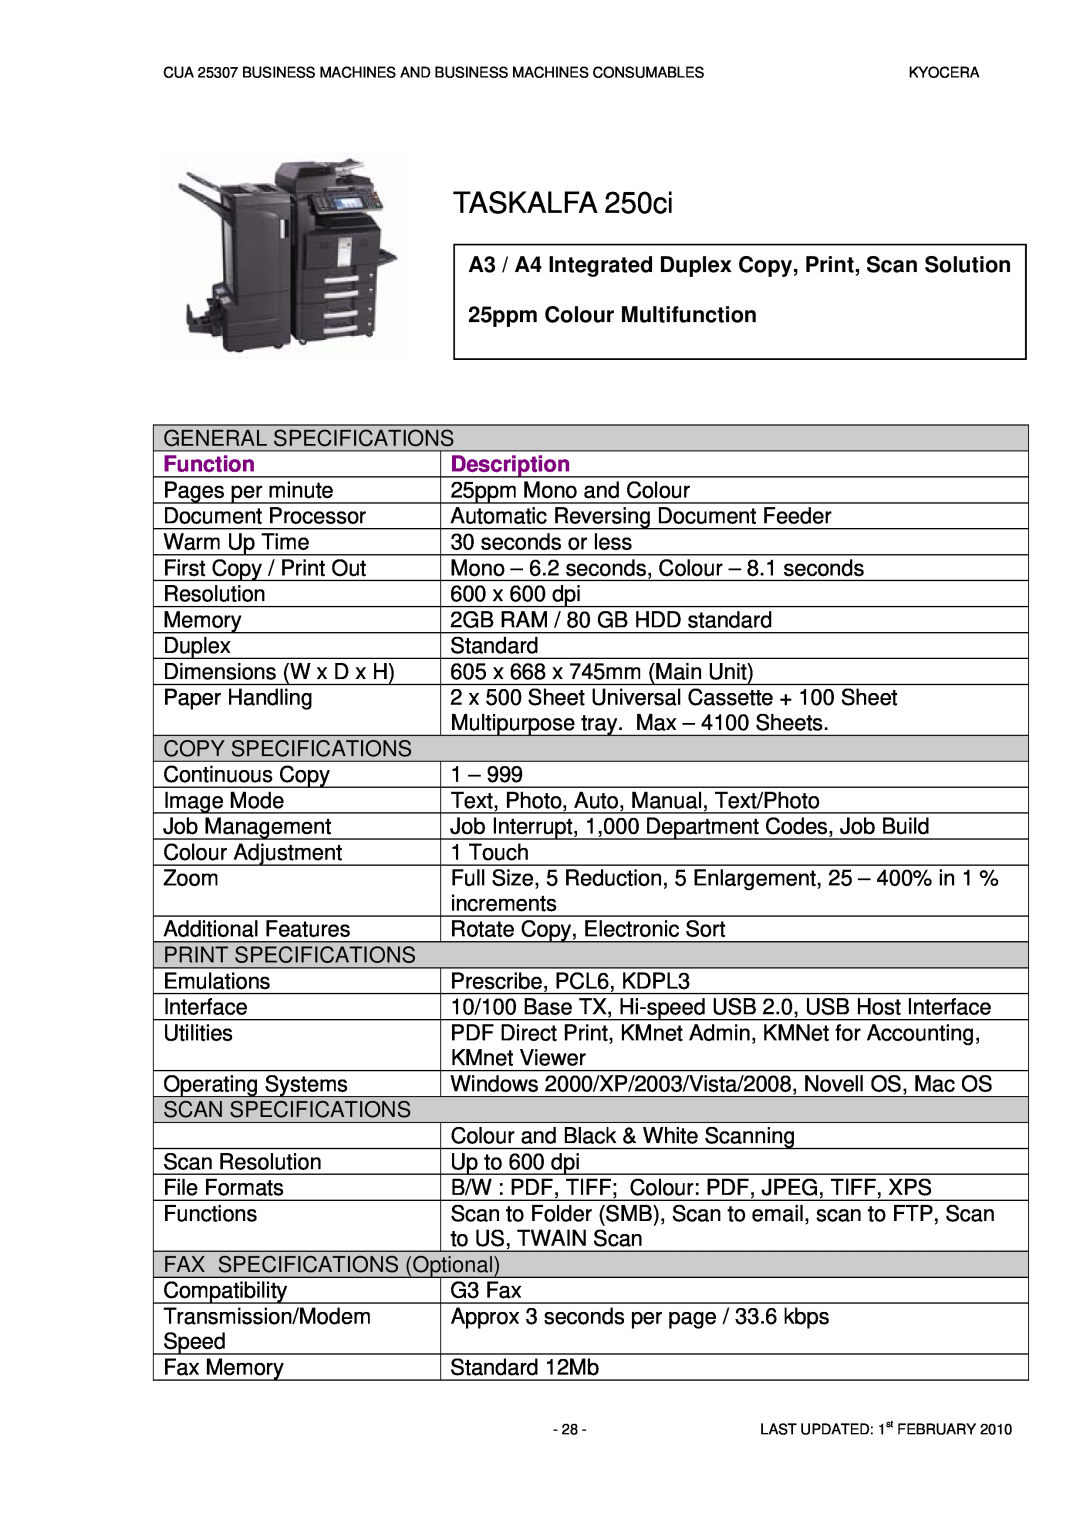 Kyocera CUA 25307 manual TASKALFA 250ci, 25ppm Colour Multifunction, Function, Description 